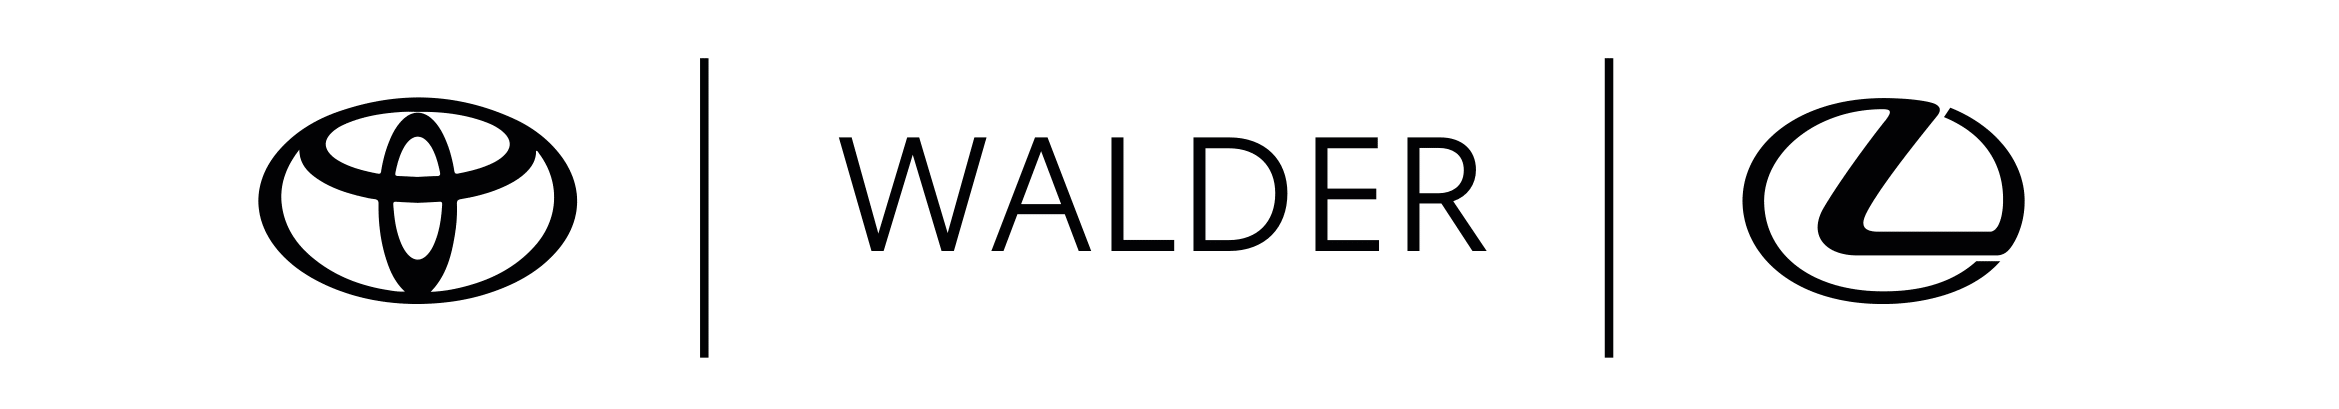 walder logo